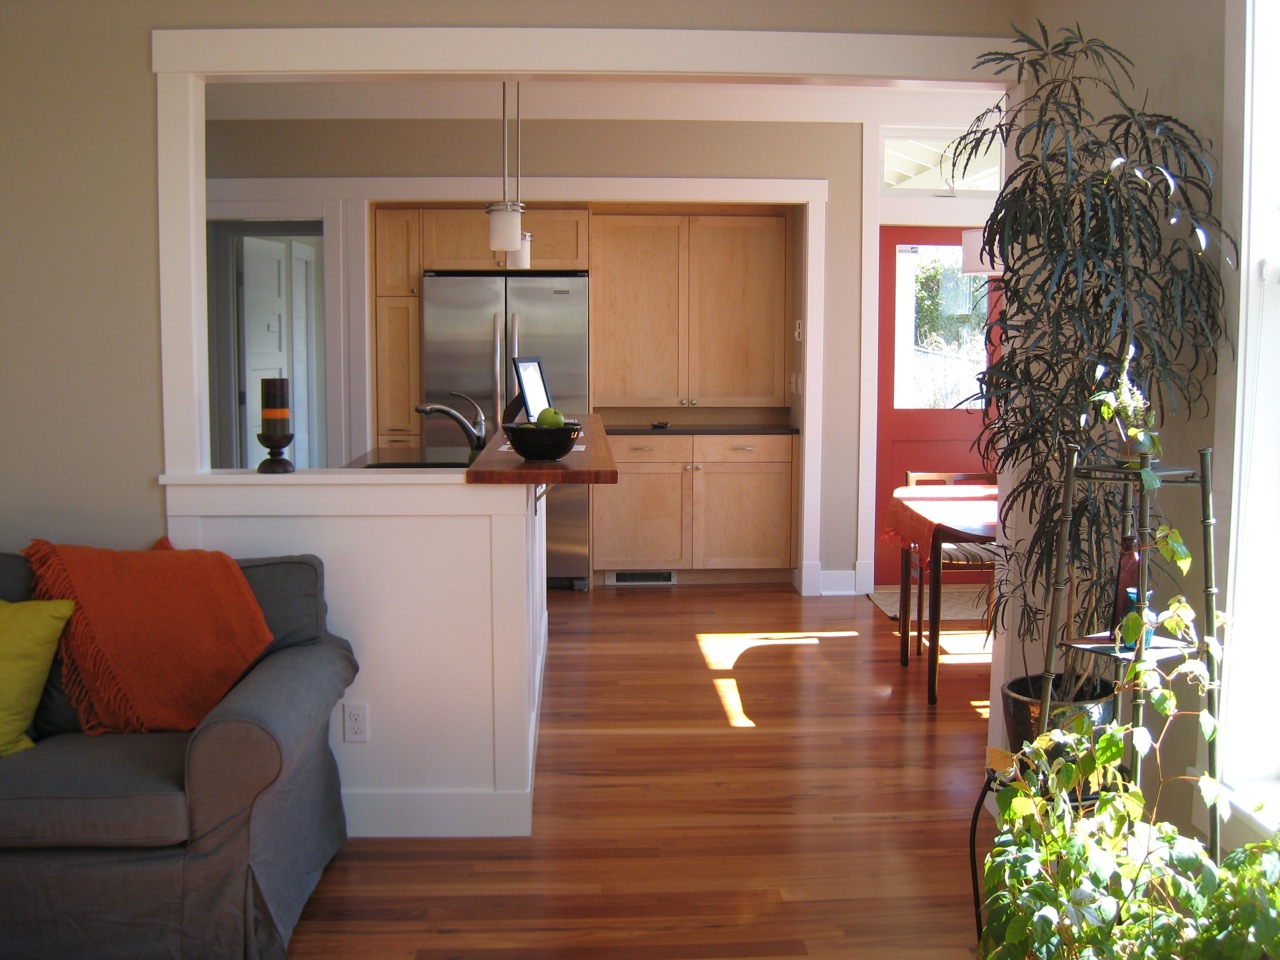 details of home: Karina - interior colors